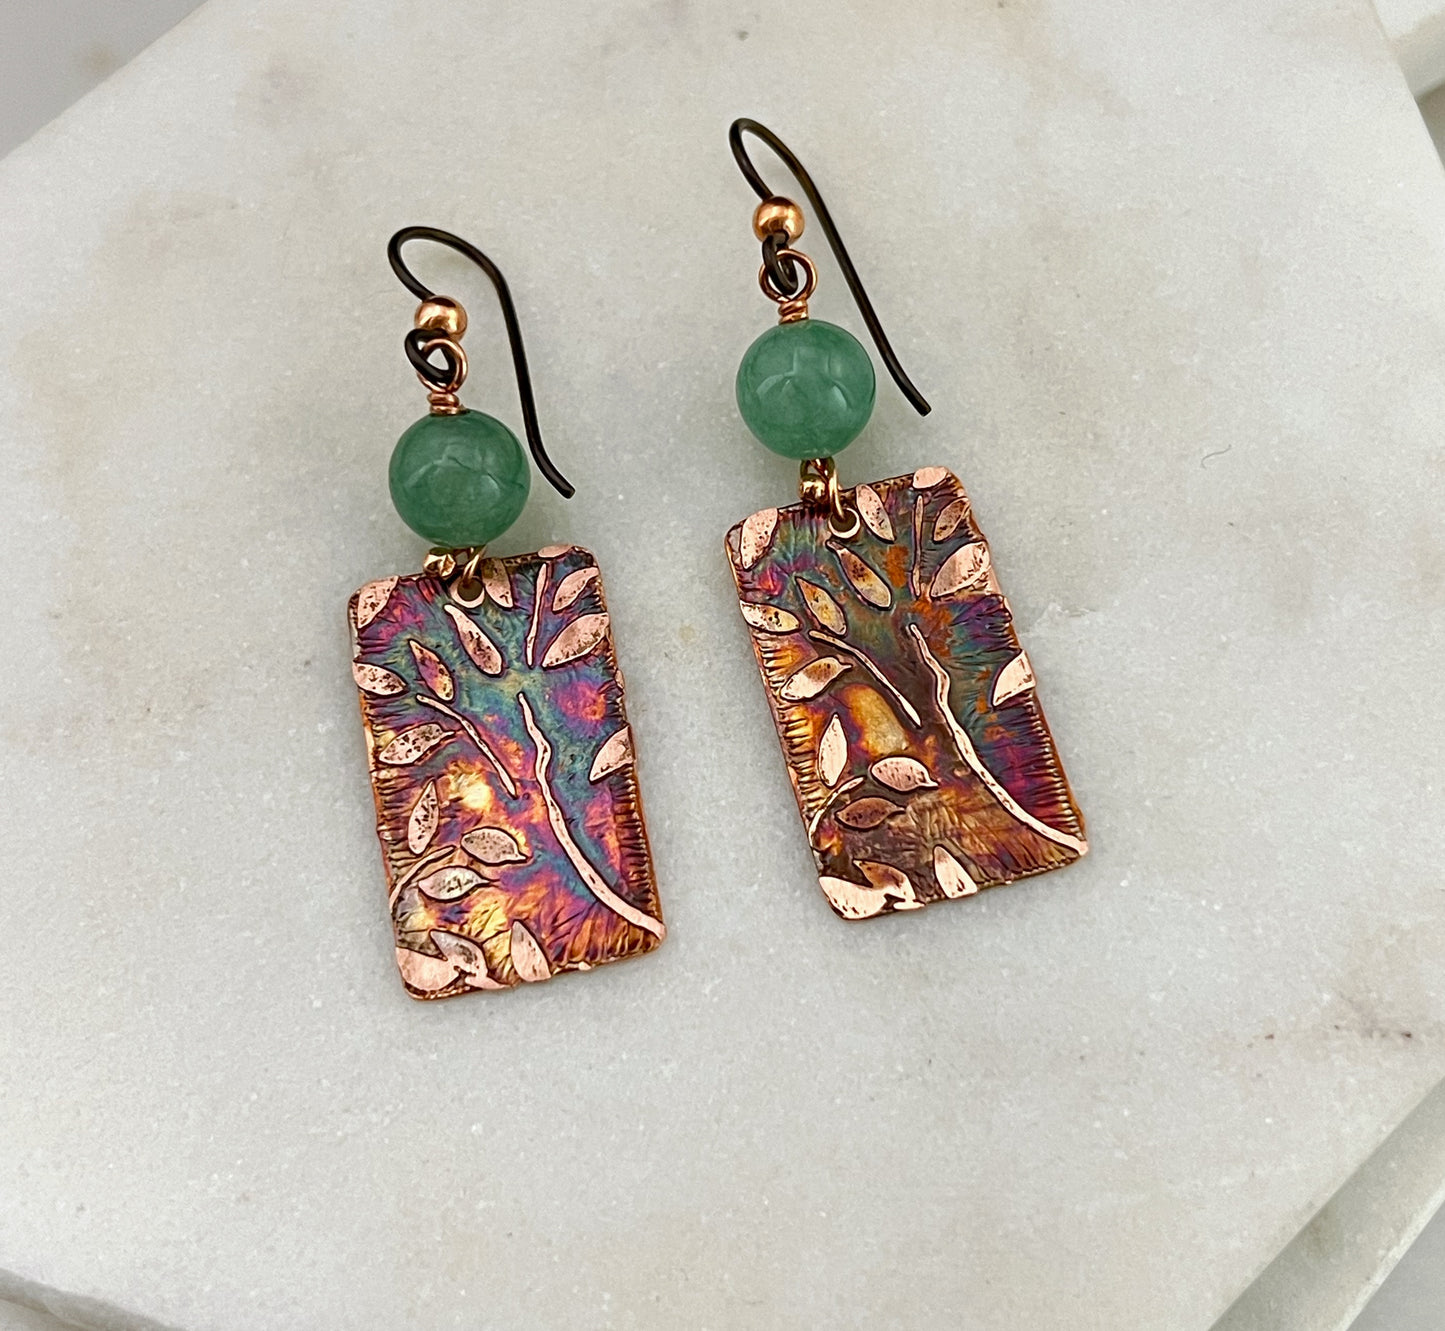 Acid etched copper earrings with aventurine gemstones